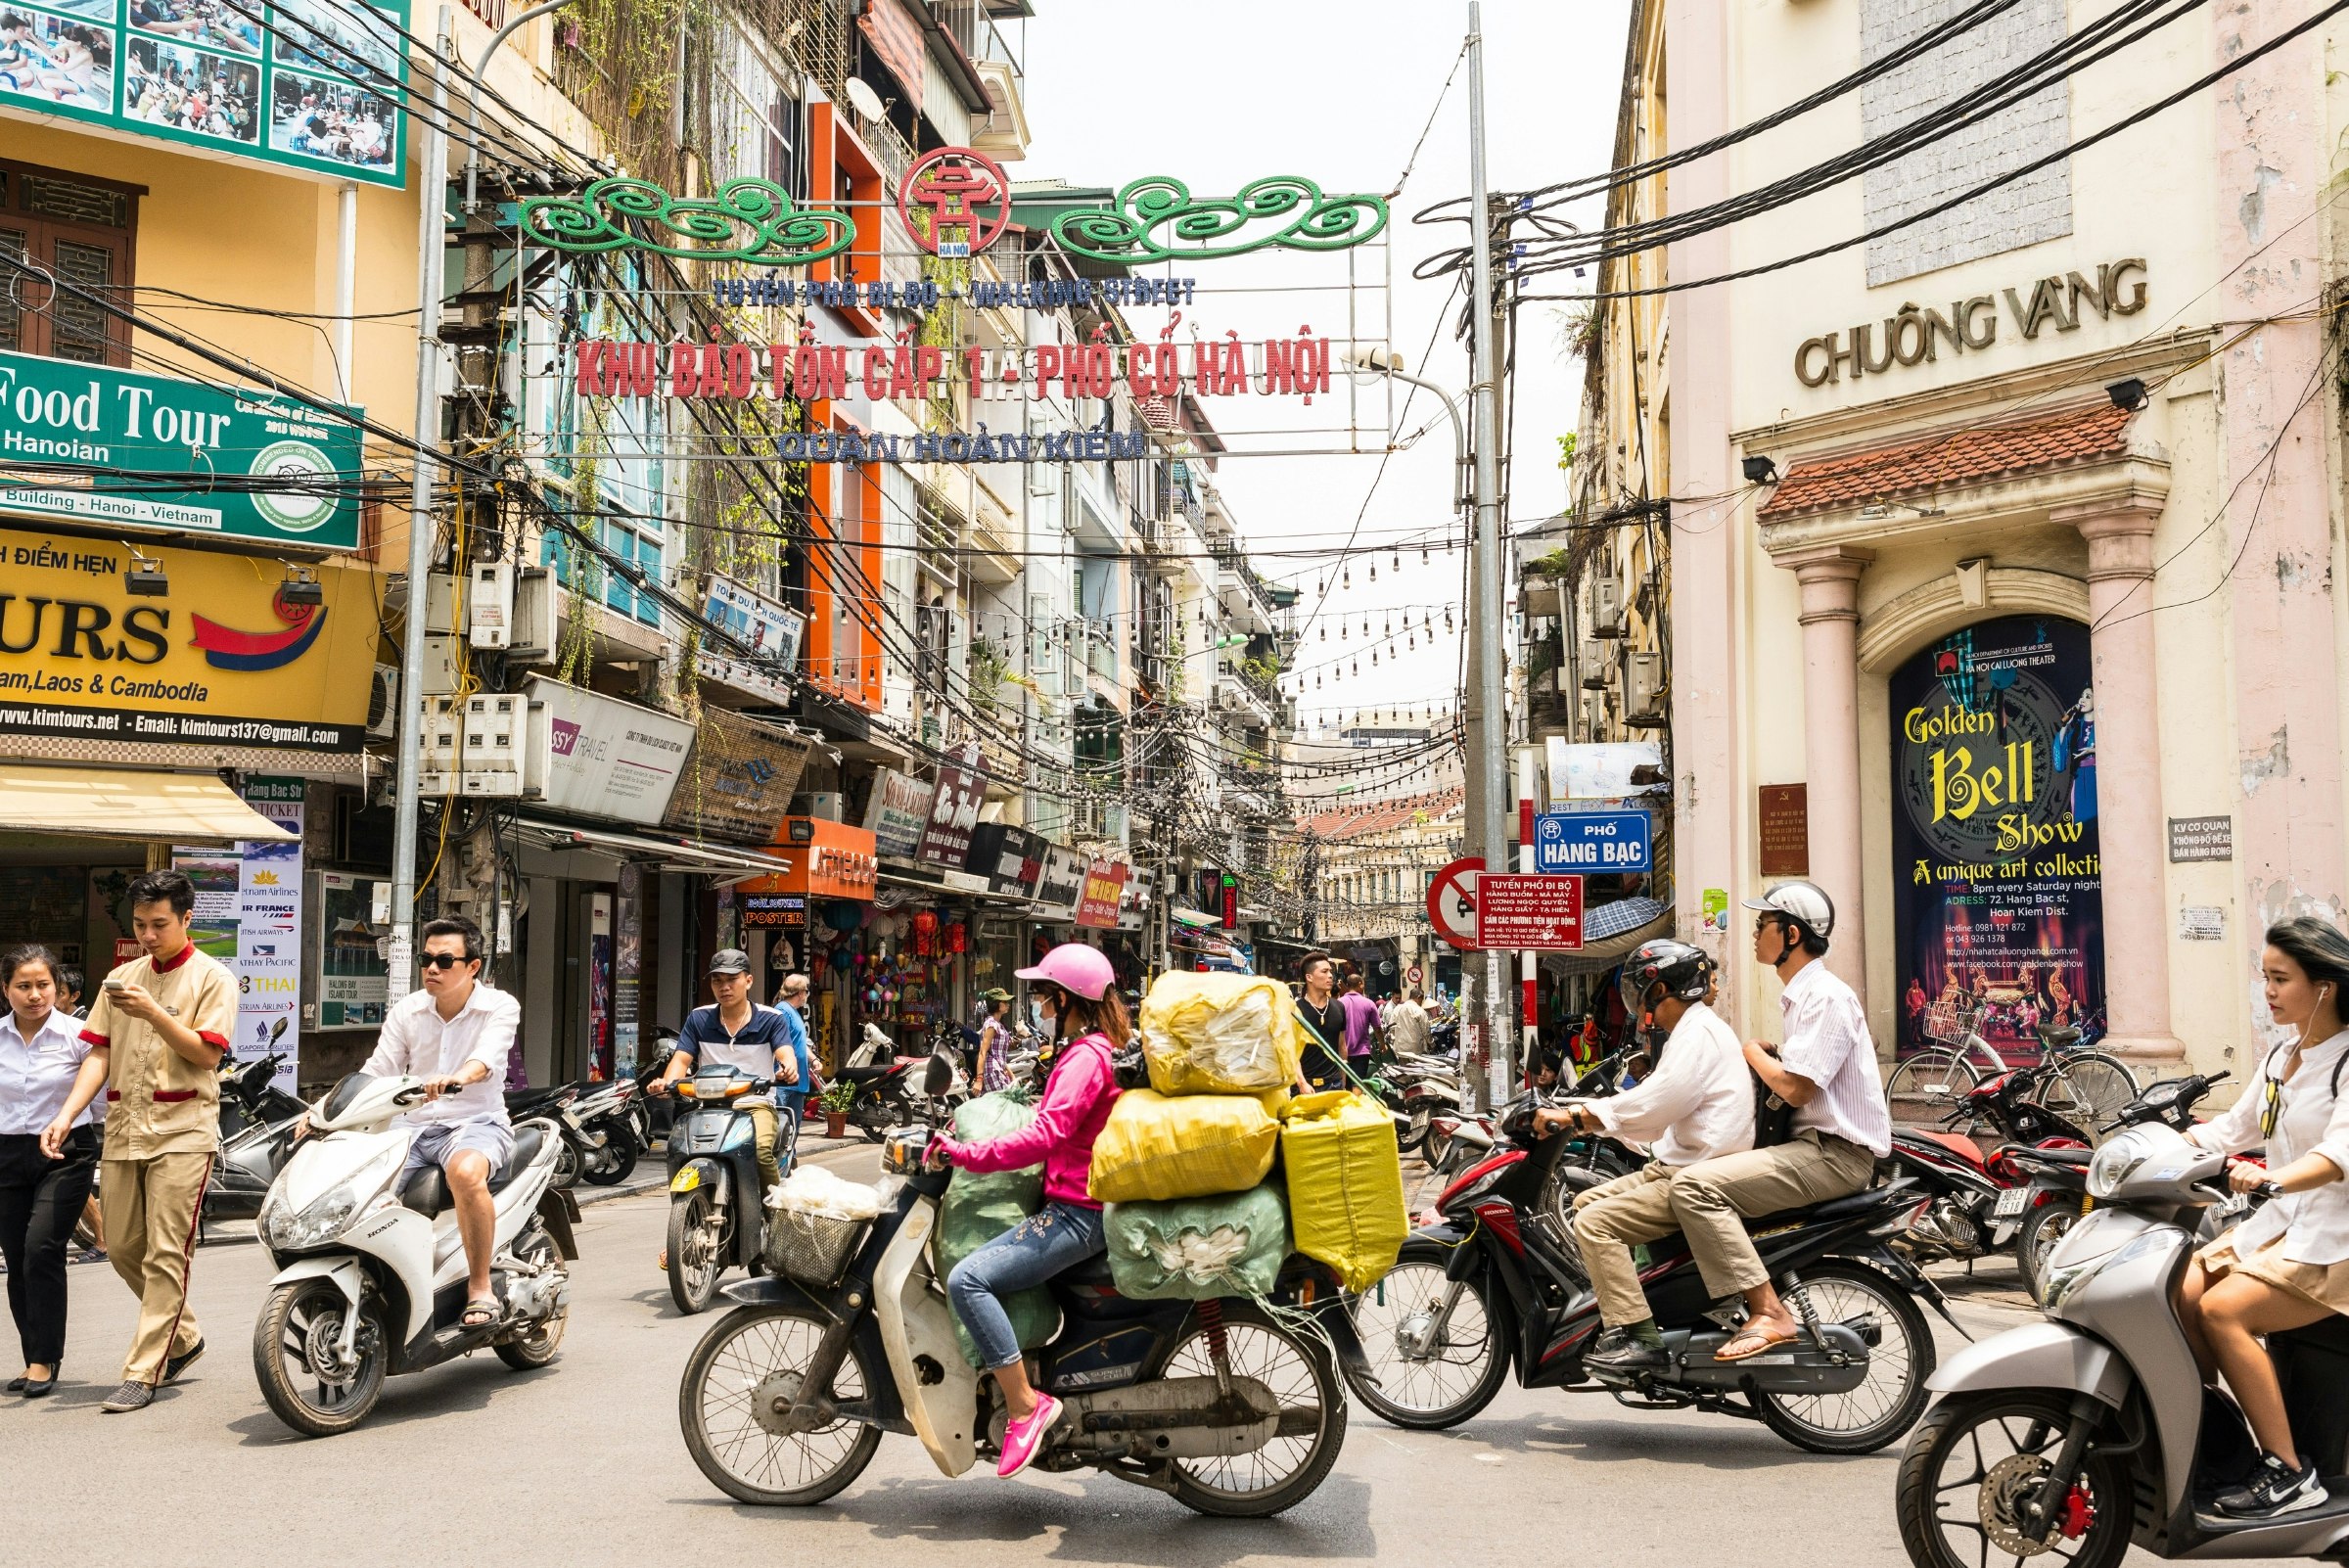 Busy motorbike traffic in the Old Quarter in Hanoi